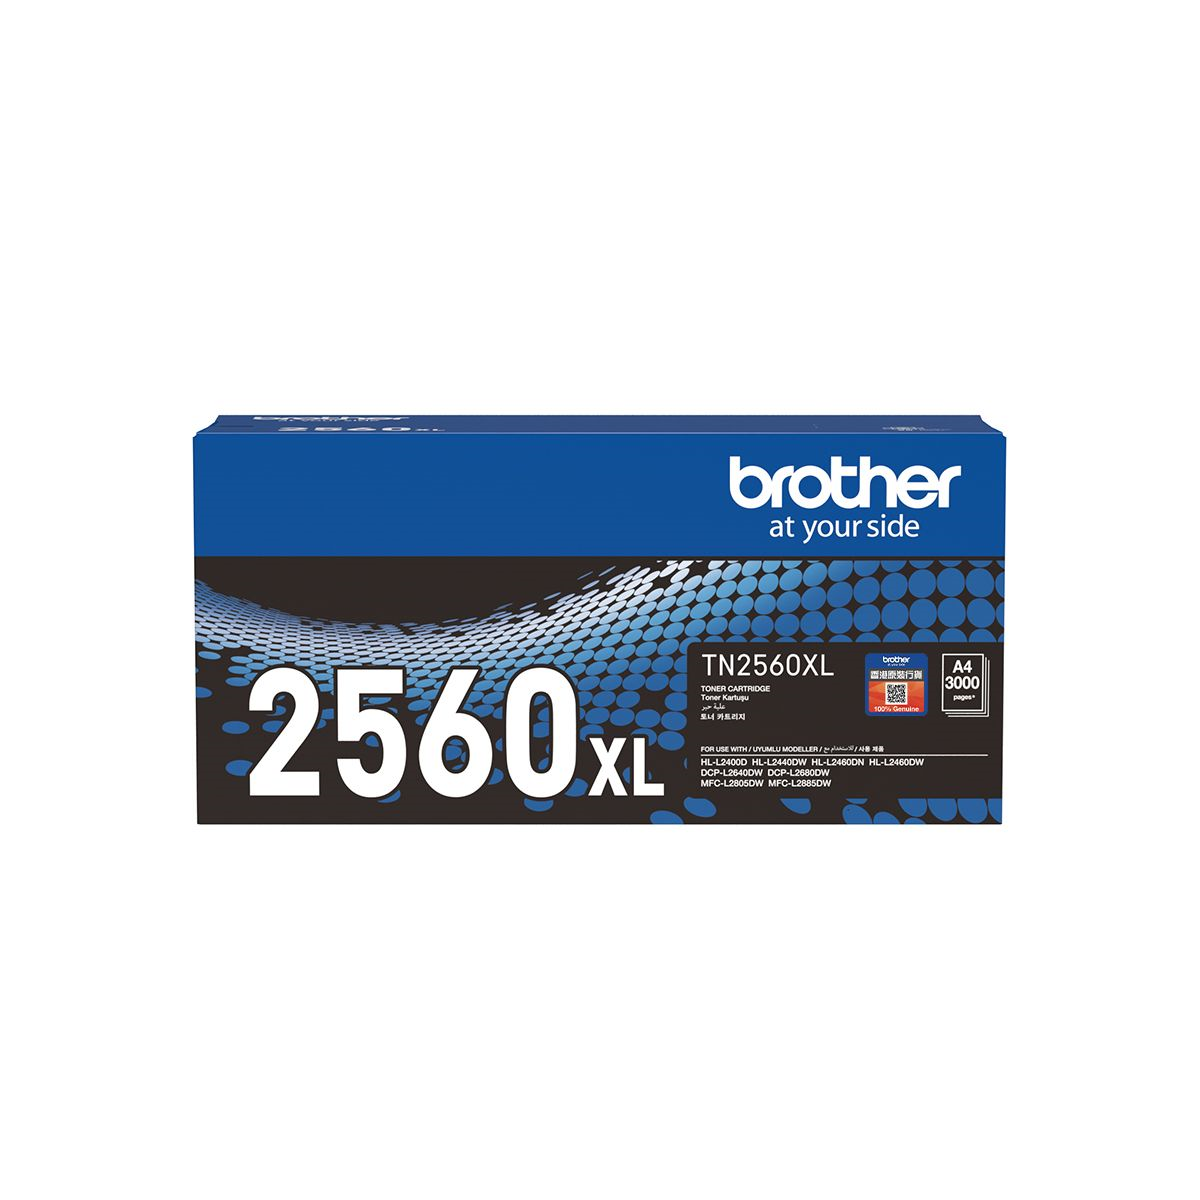 Brother 2560XL Black Toner Cartridge (High Capacity) #TN2560XL